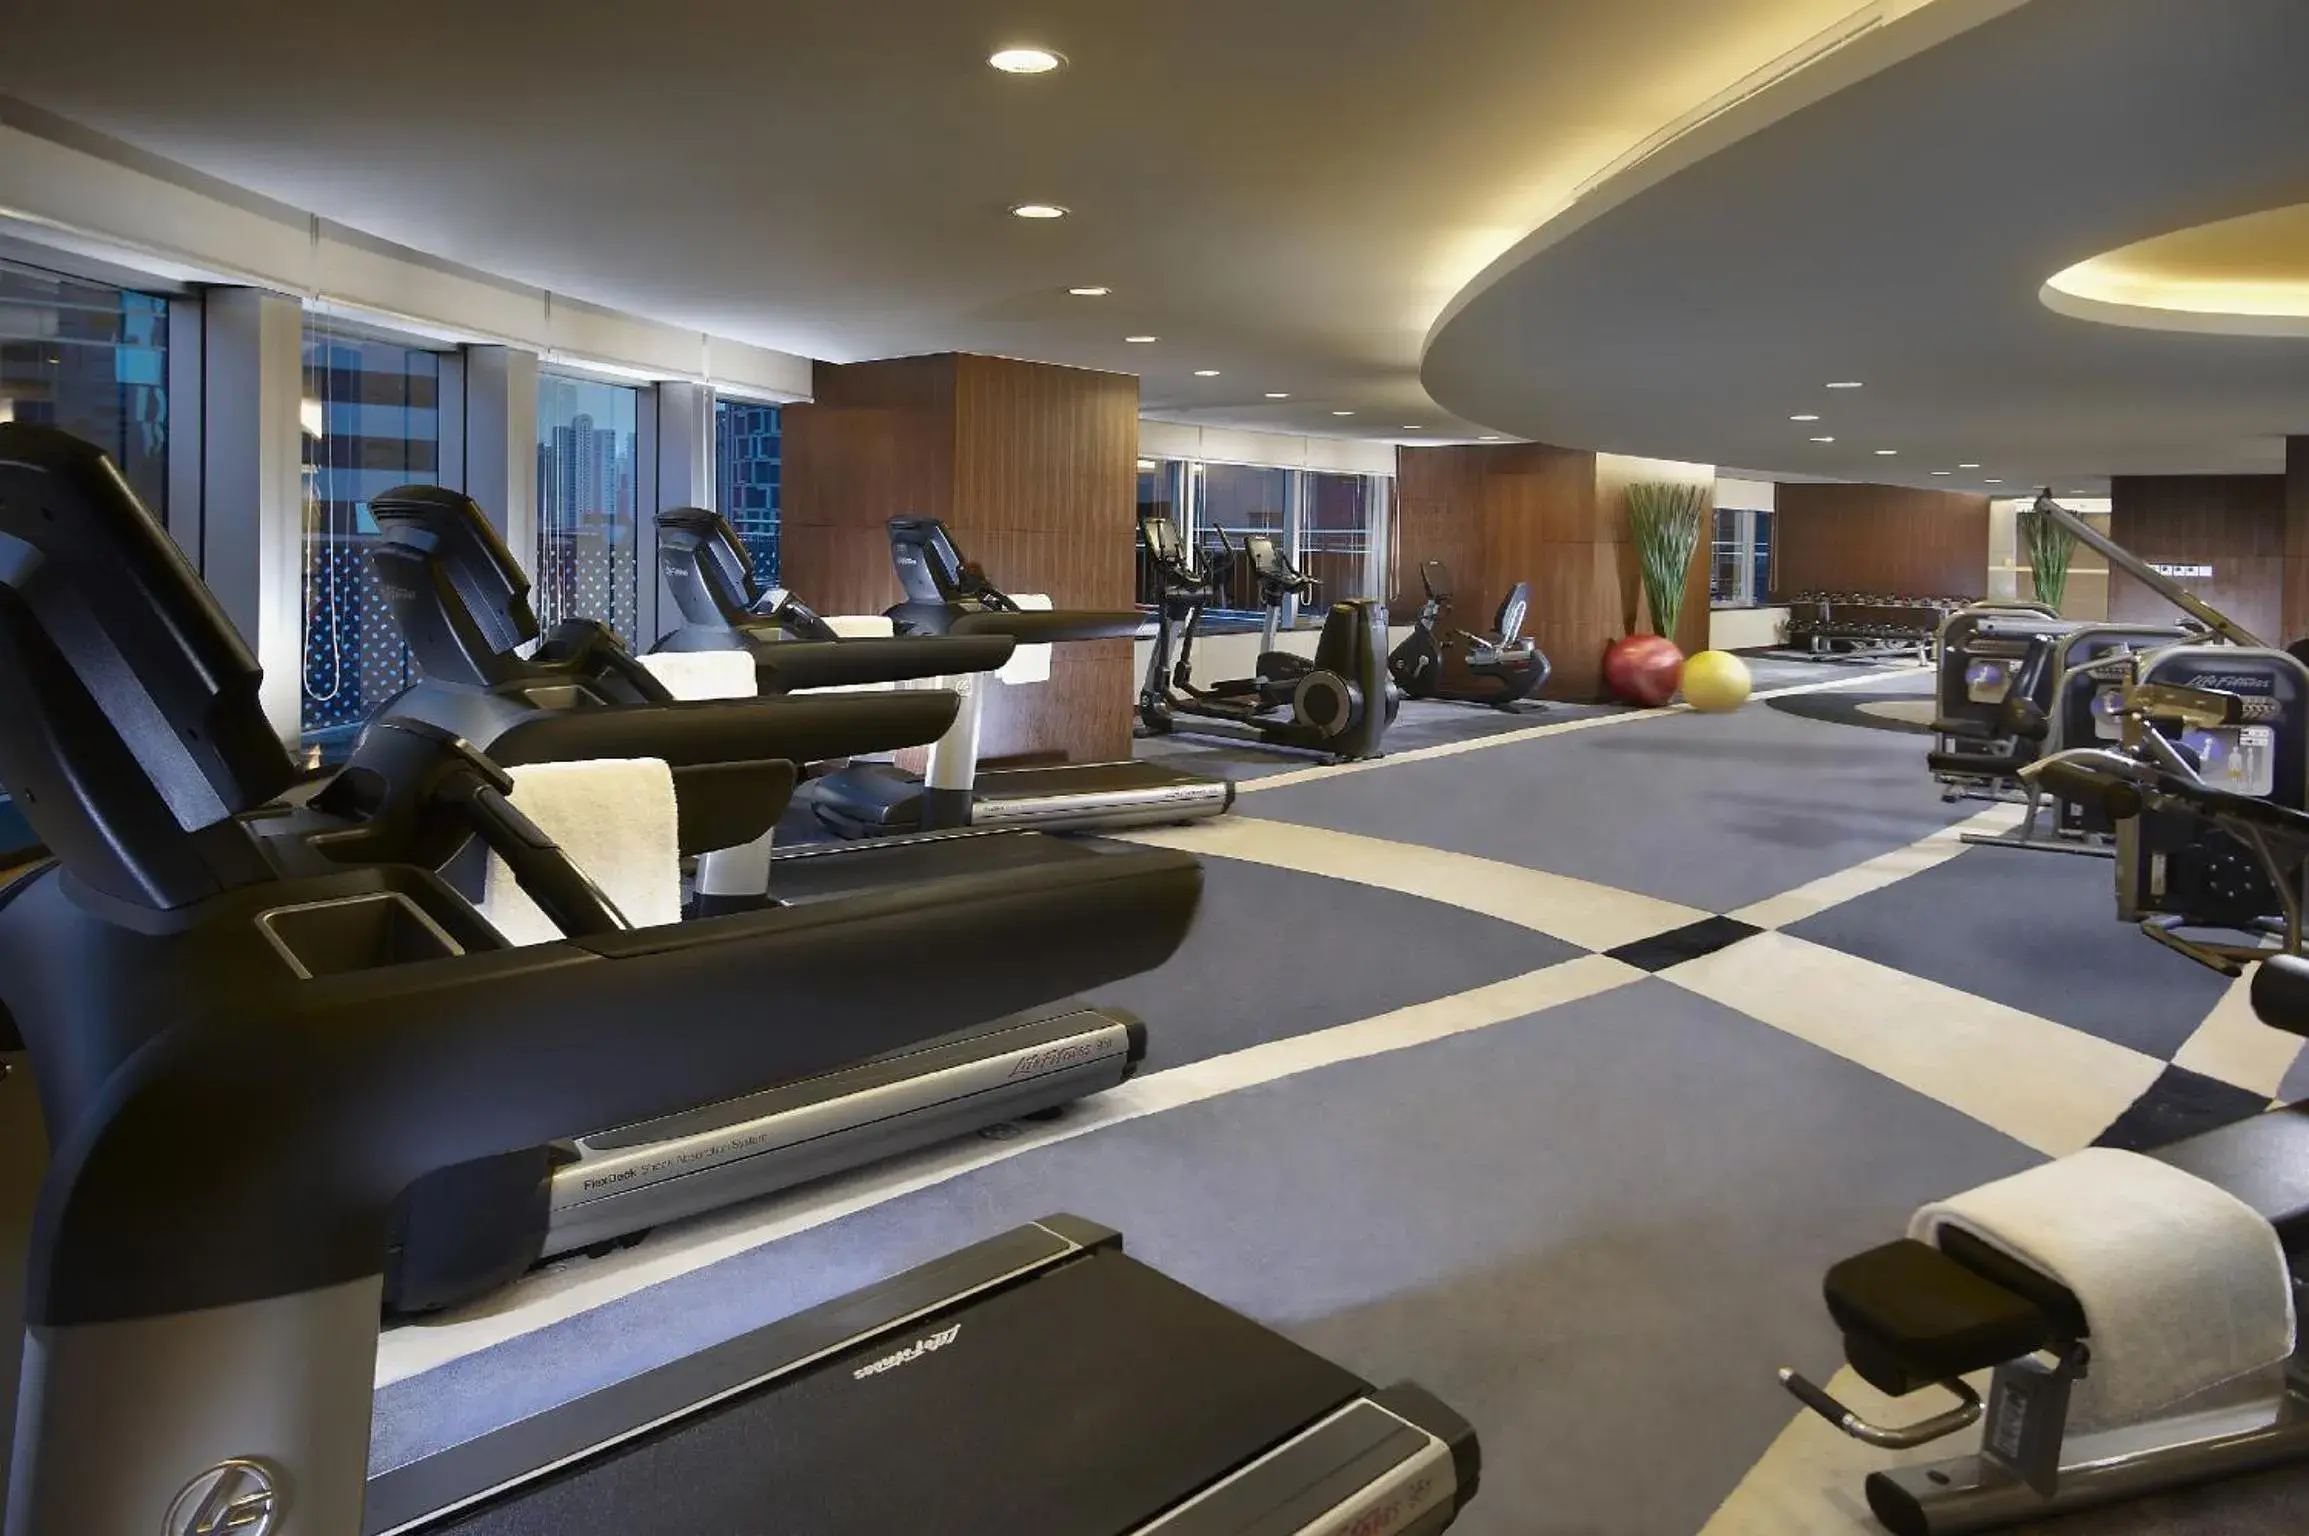 Fitness centre/facilities, Fitness Center/Facilities in Ascott Huai Hai Road Shanghai